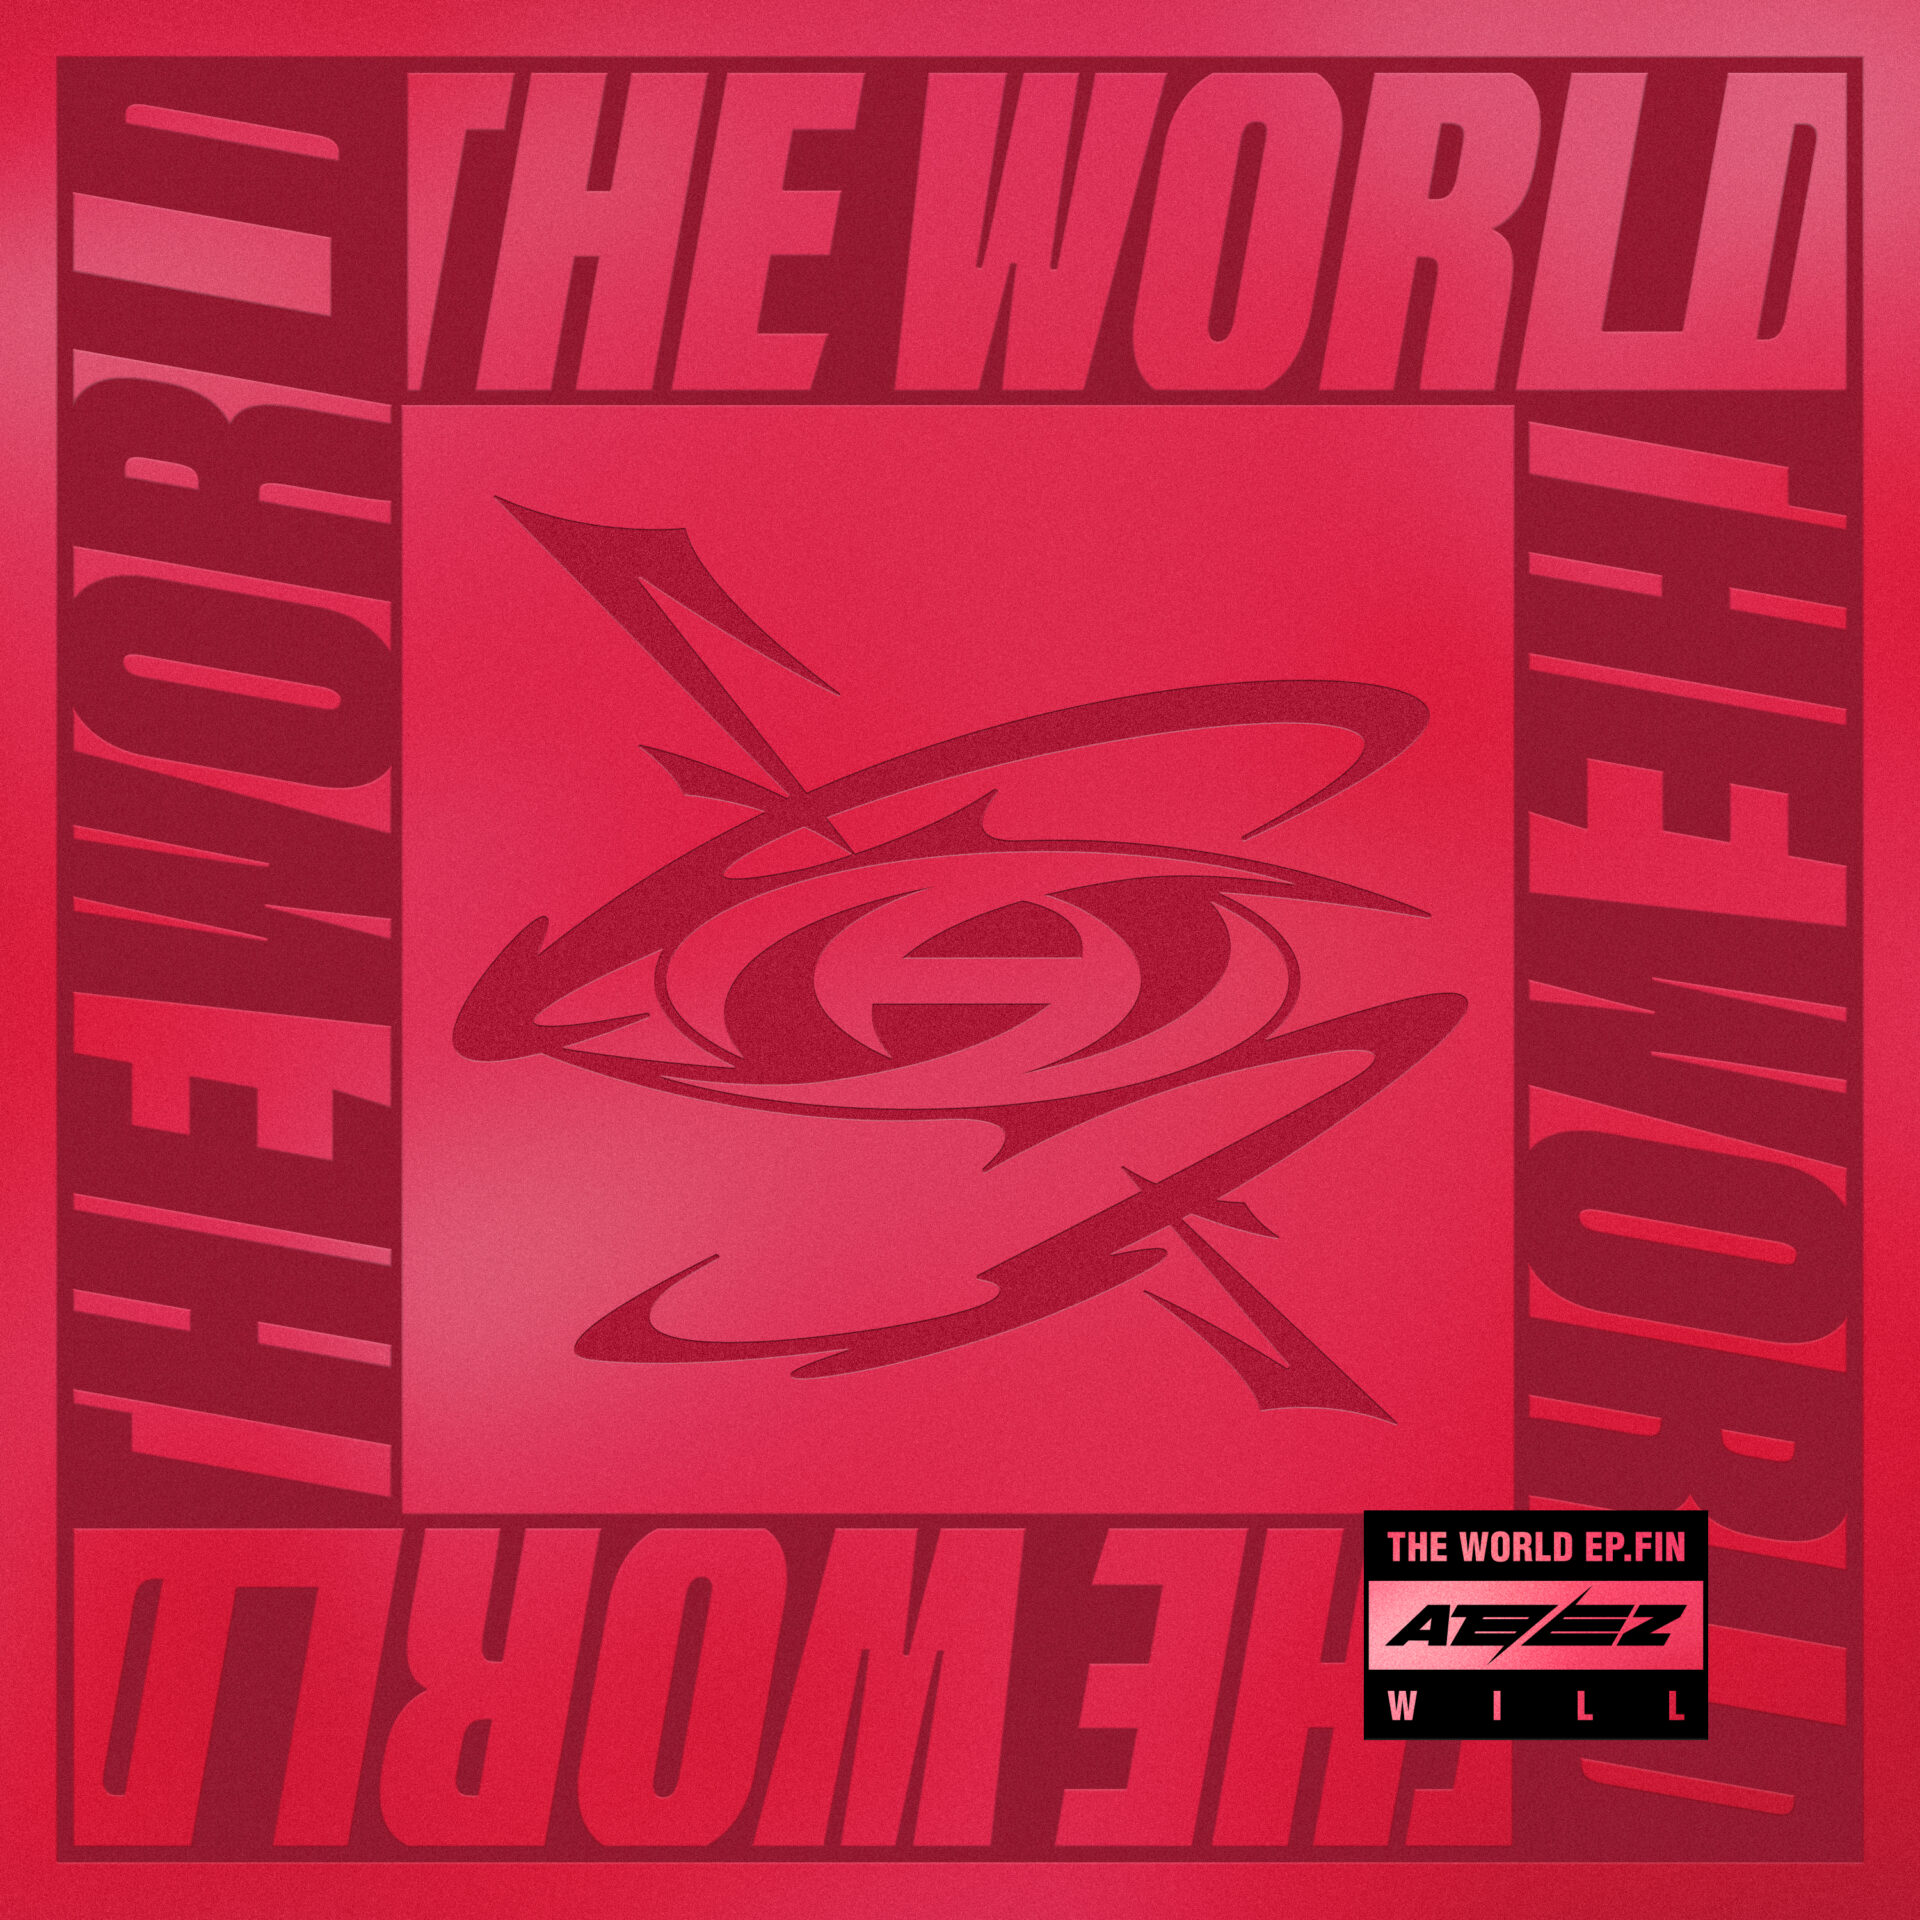 『THE WORLD EP.FIN : WILL』ジャケット ©KQ ENTERTAINMENT